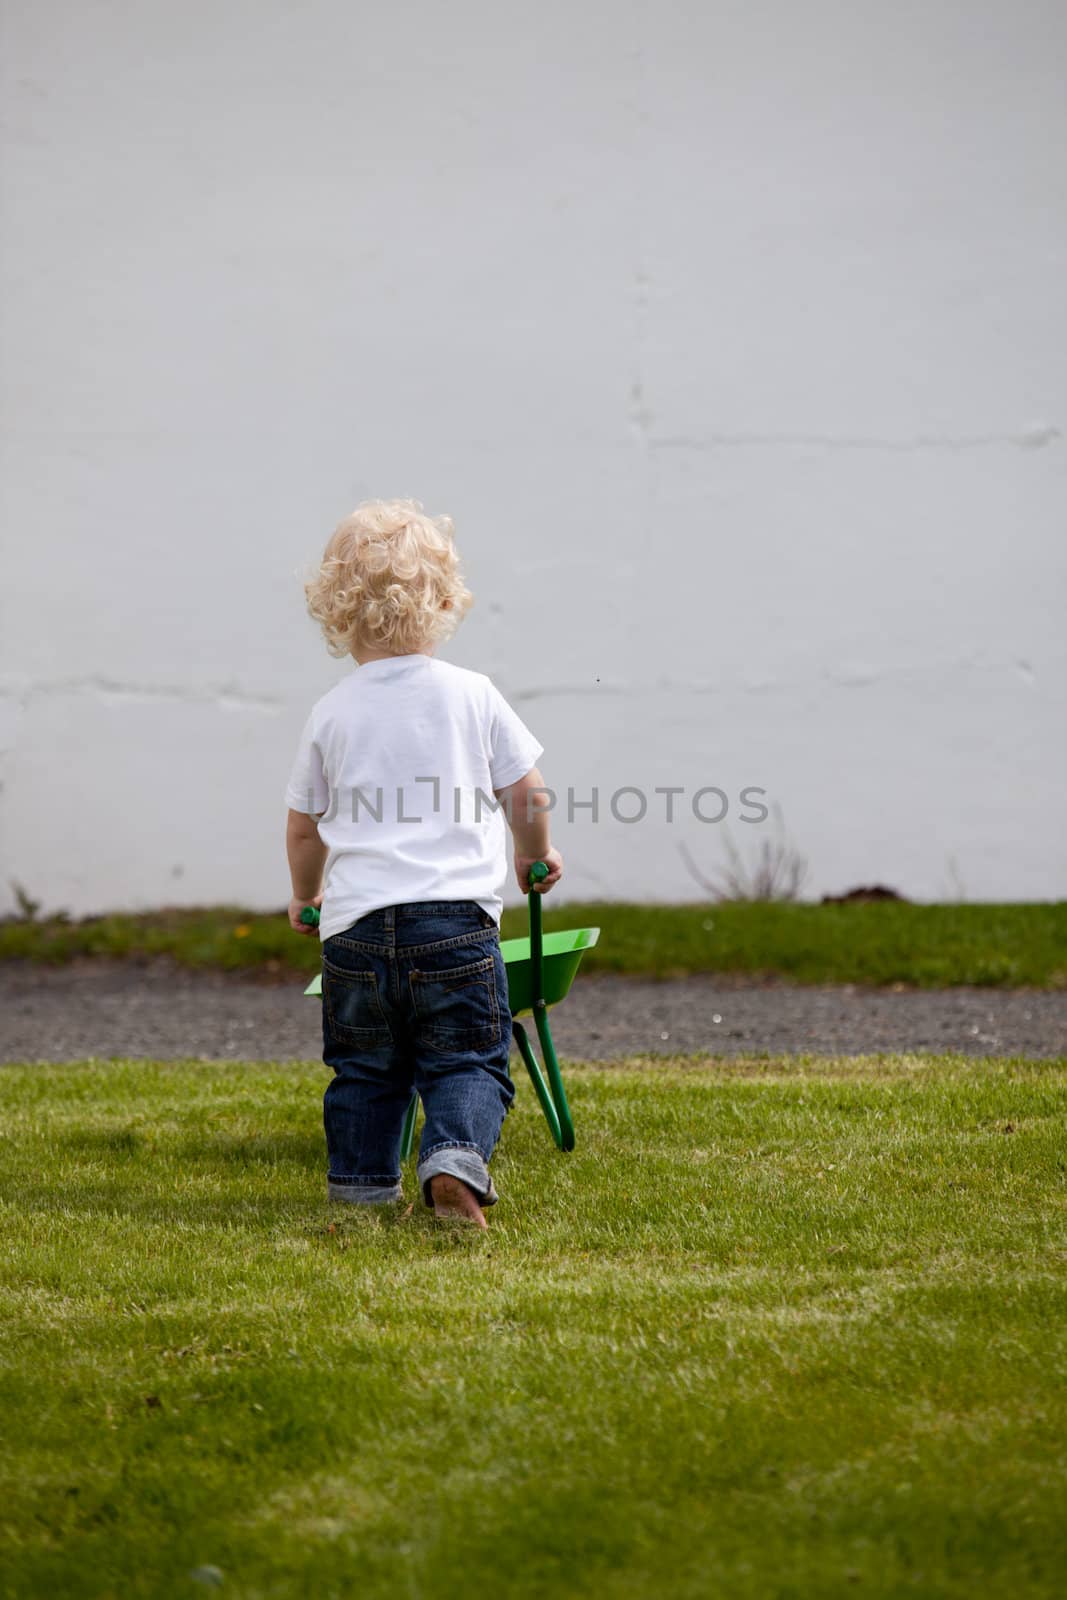 A young boy pushing a wheelbarrow on grass